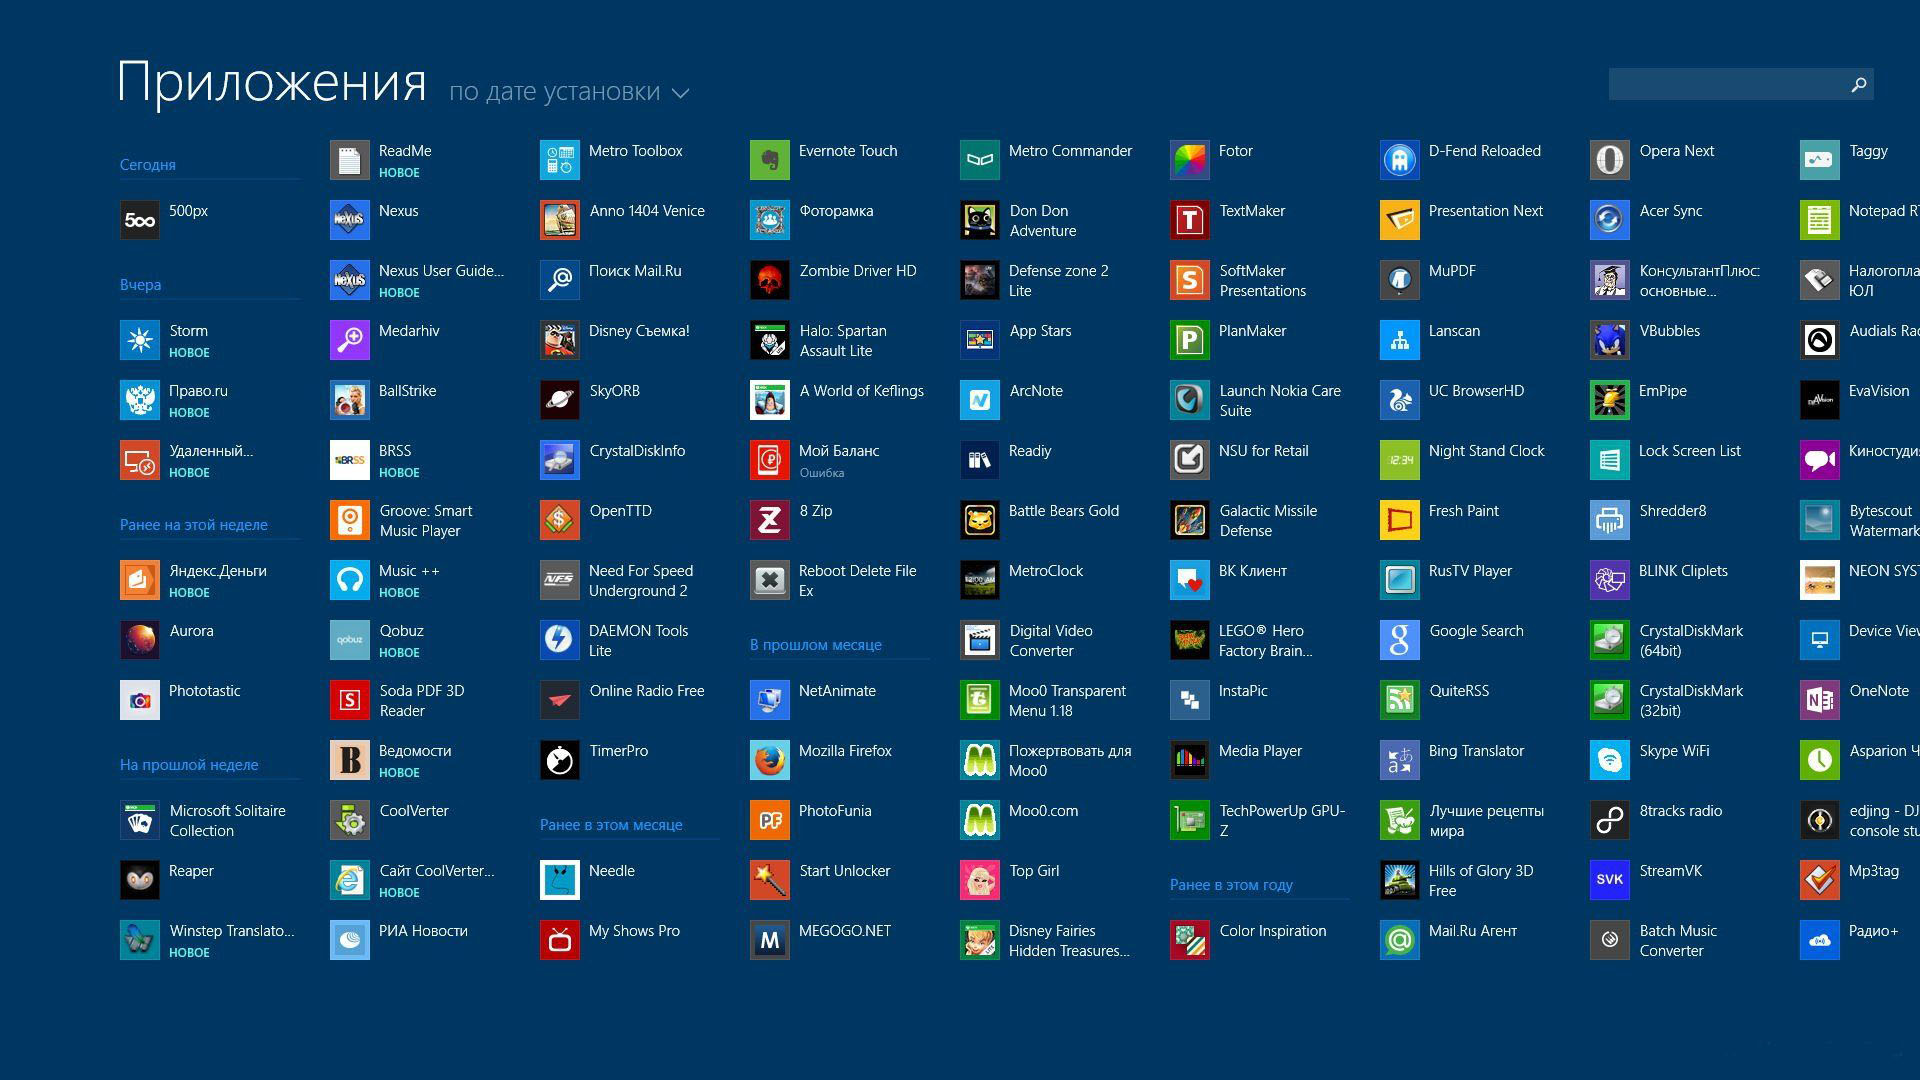 Утилиты для windows 10. Программы Windows. Приложения Windows 10. Программы для Windows 10. Список приложений ПК.